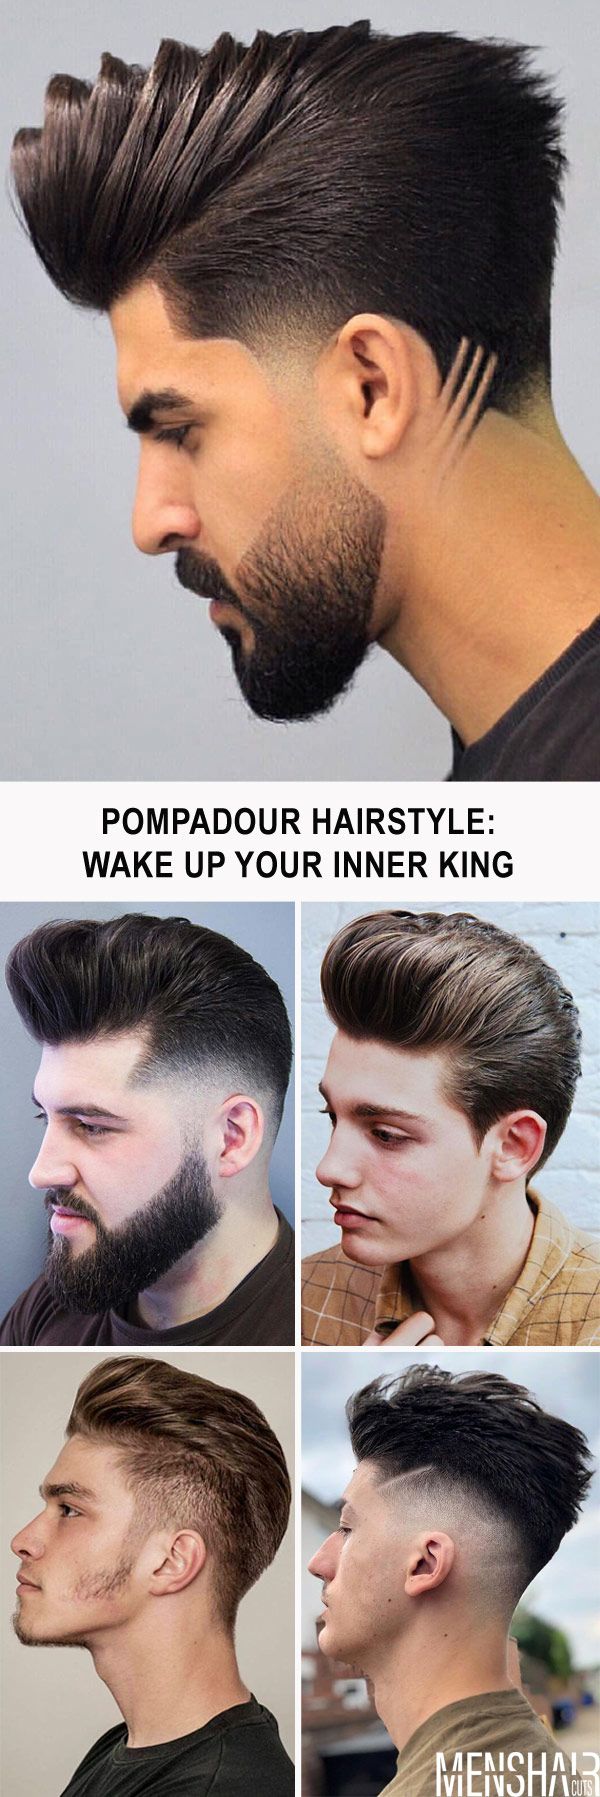 Hair Styling Inspirational Ideas For An Effortless Pompadour